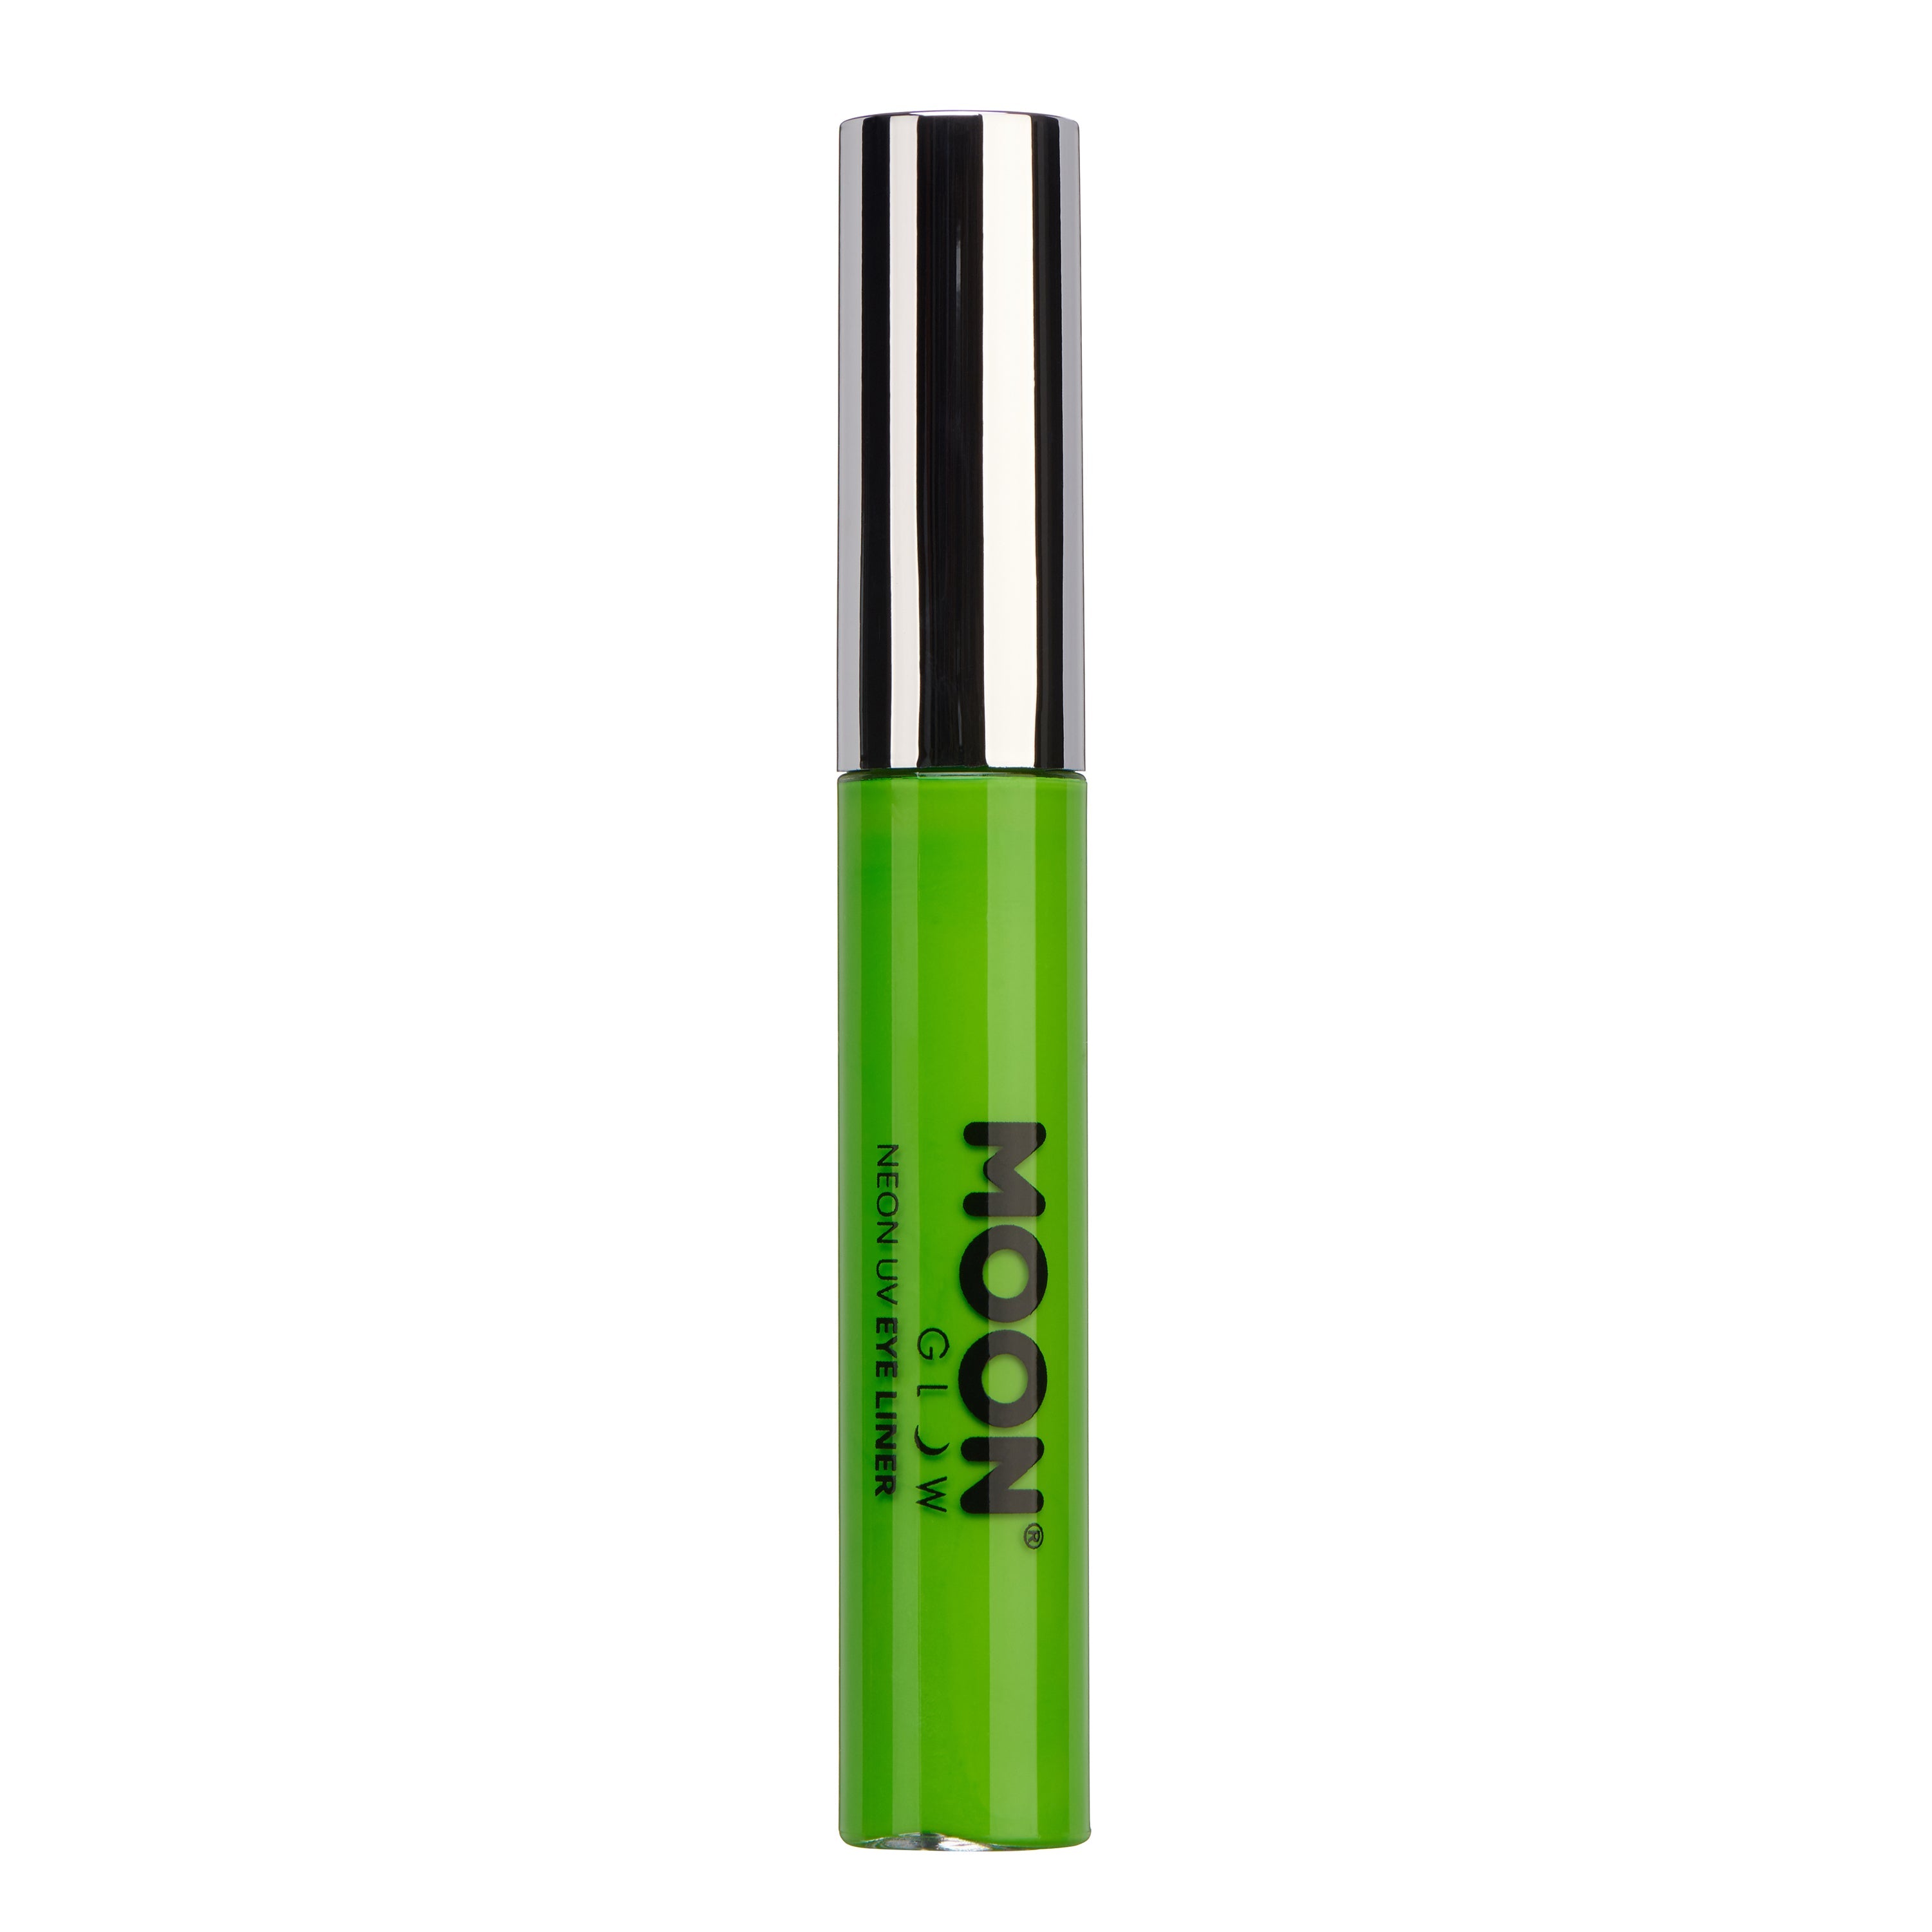 Intense Green - Neon UV Glow Blacklight Eyeliner, 10mL. Cosmetically certified, FDA & Health Canada compliant, cruelty free and vegan.